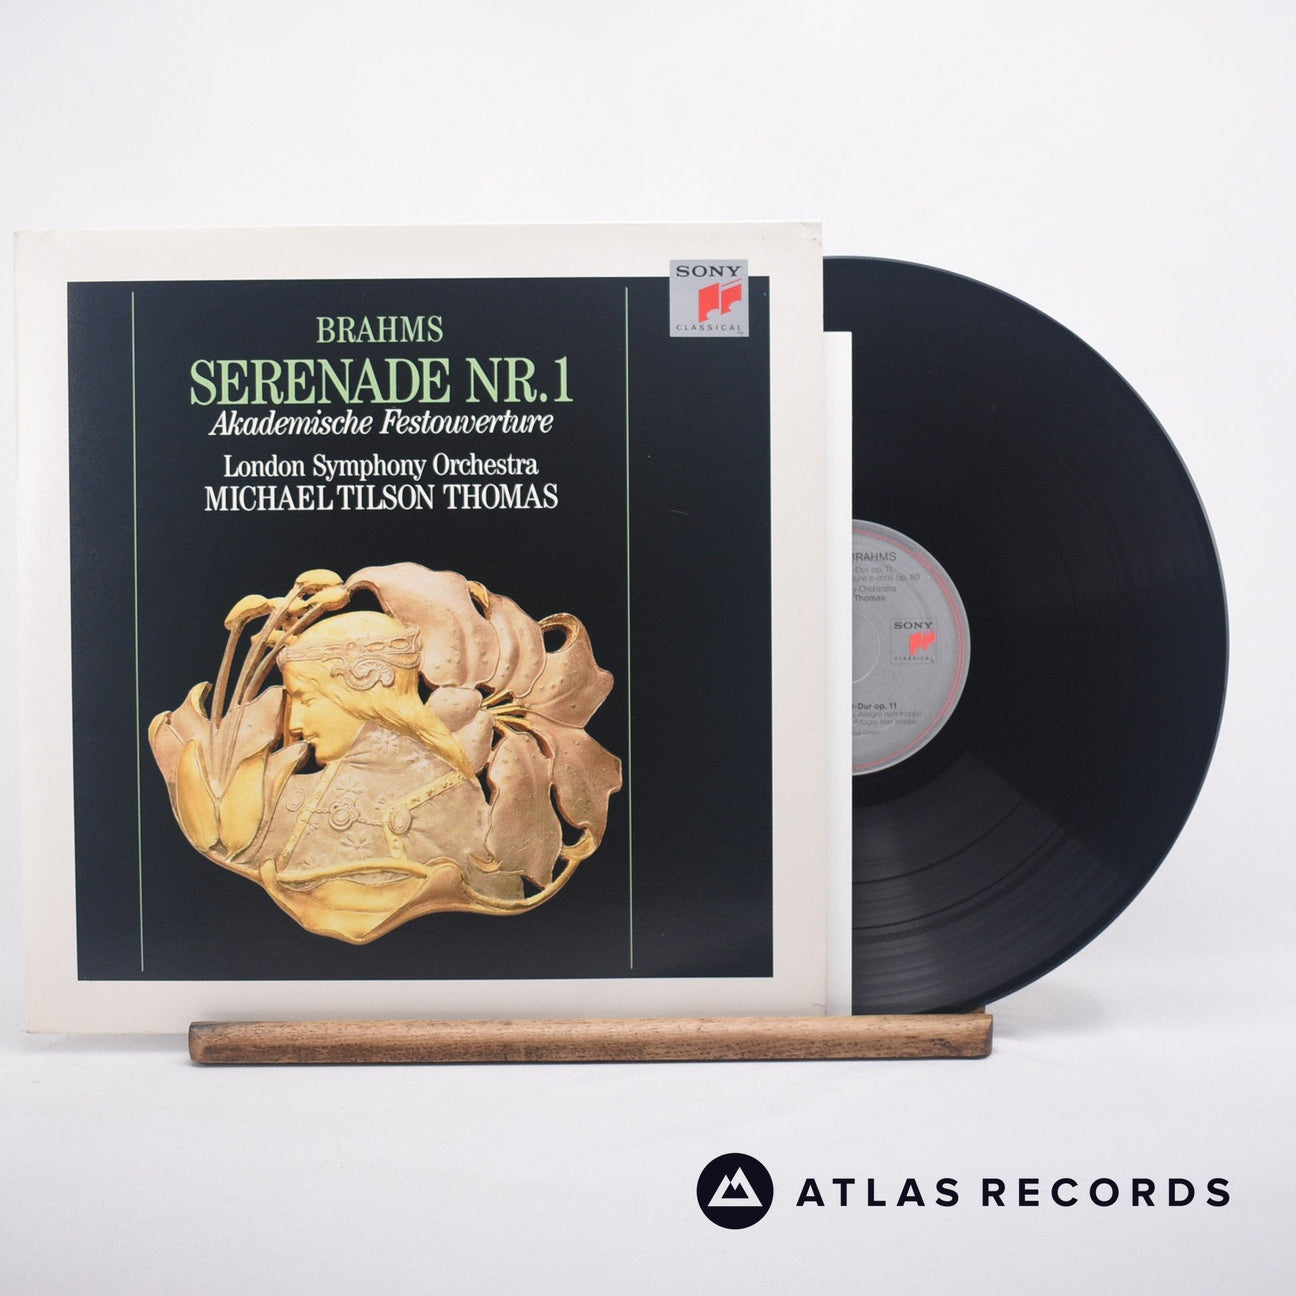 Johannes Brahms Serenade Nr.1 LP Vinyl Record - Front Cover & Record